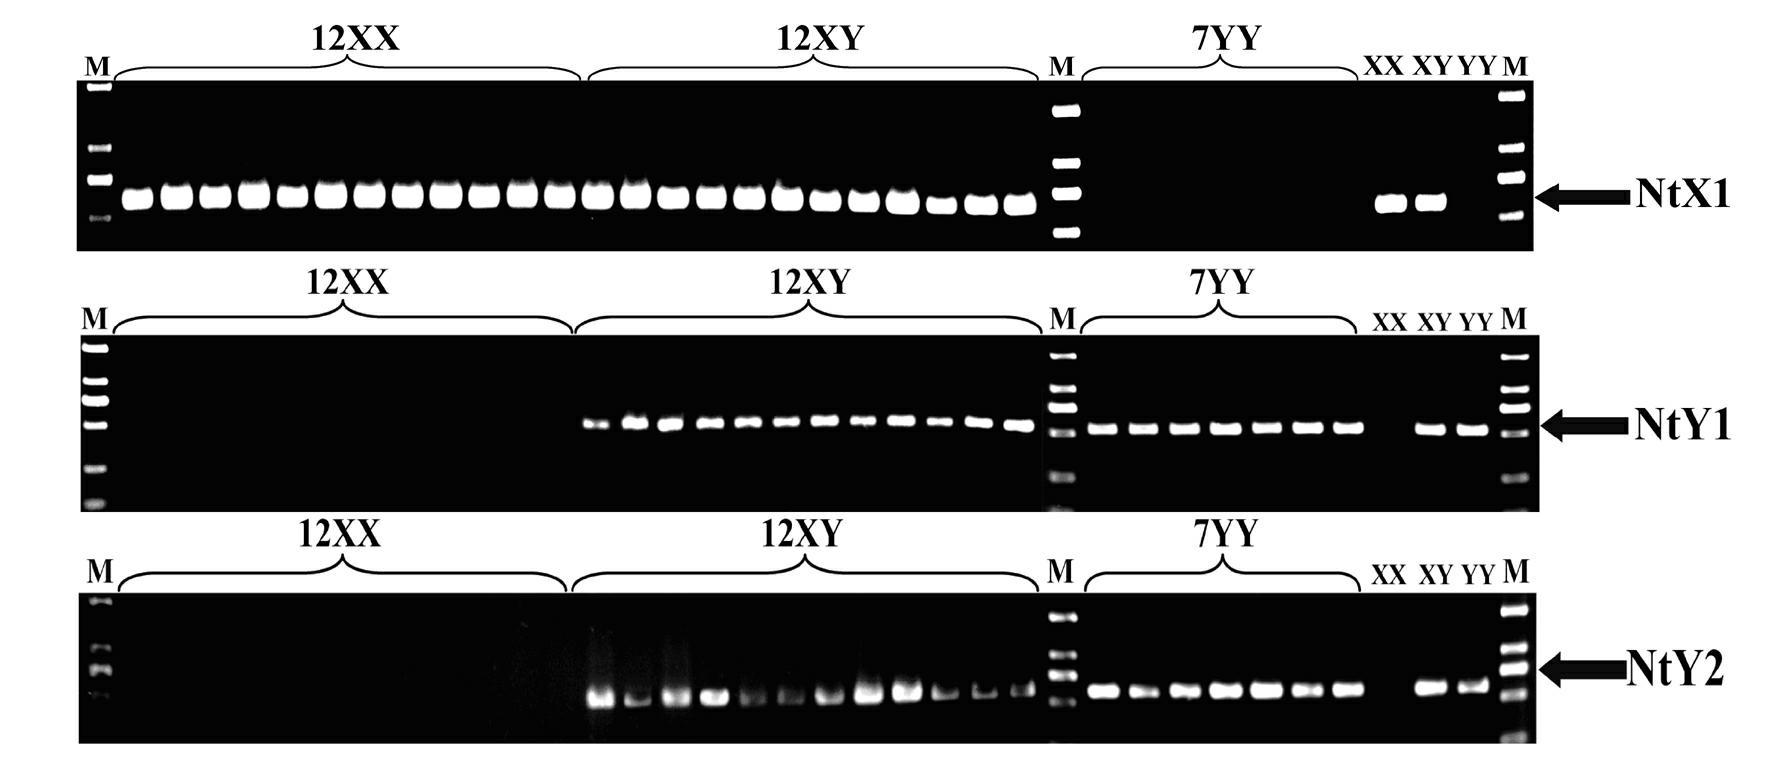 Oreochromis niloticus sex chromosome specific molecular marker